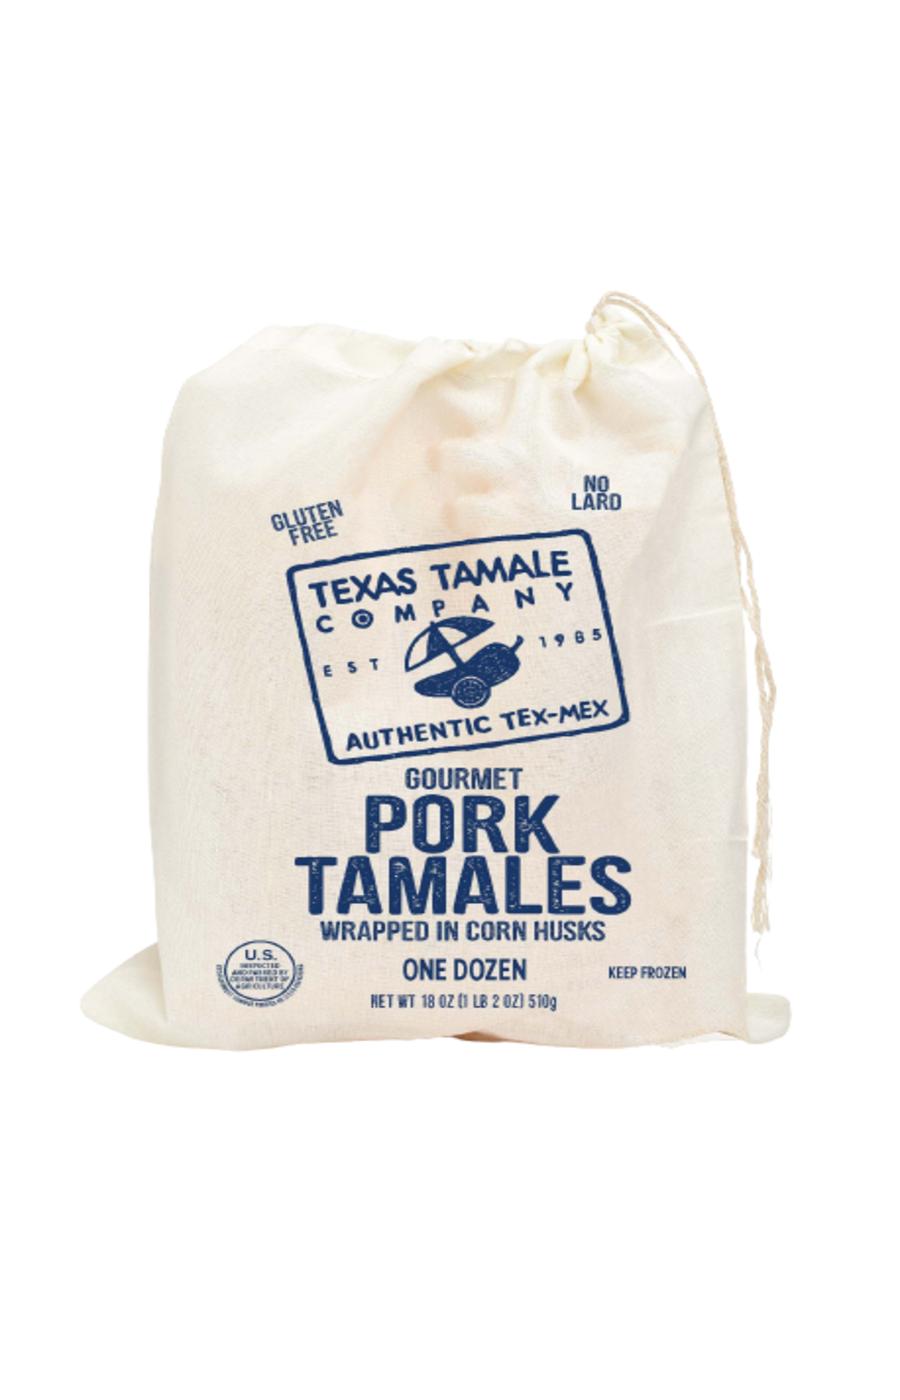 Texas Tamale Company Gourmet Pork Tamales; image 1 of 3